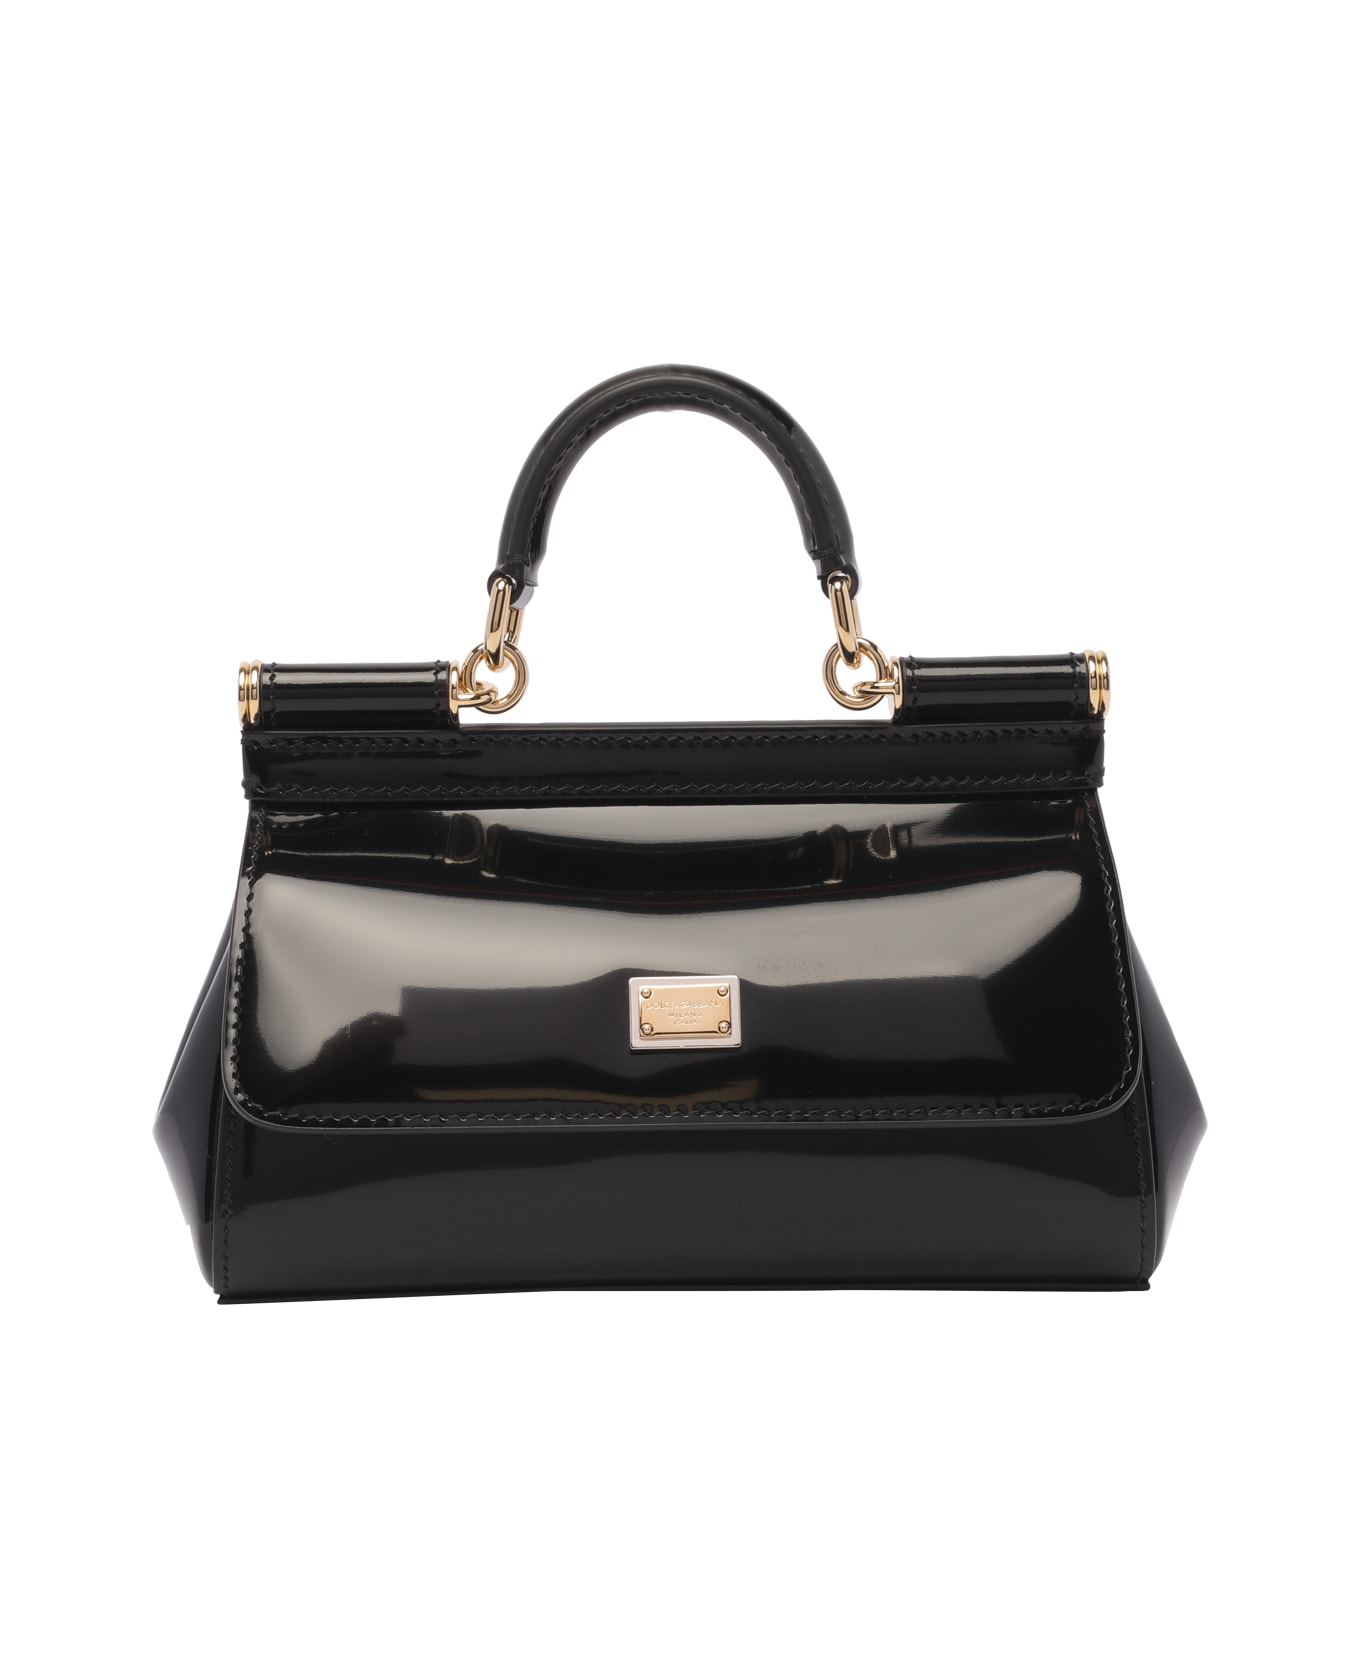 Dolce&Gabbana Sicily Small - Handbag for Woman - Black - BB7116A103780999